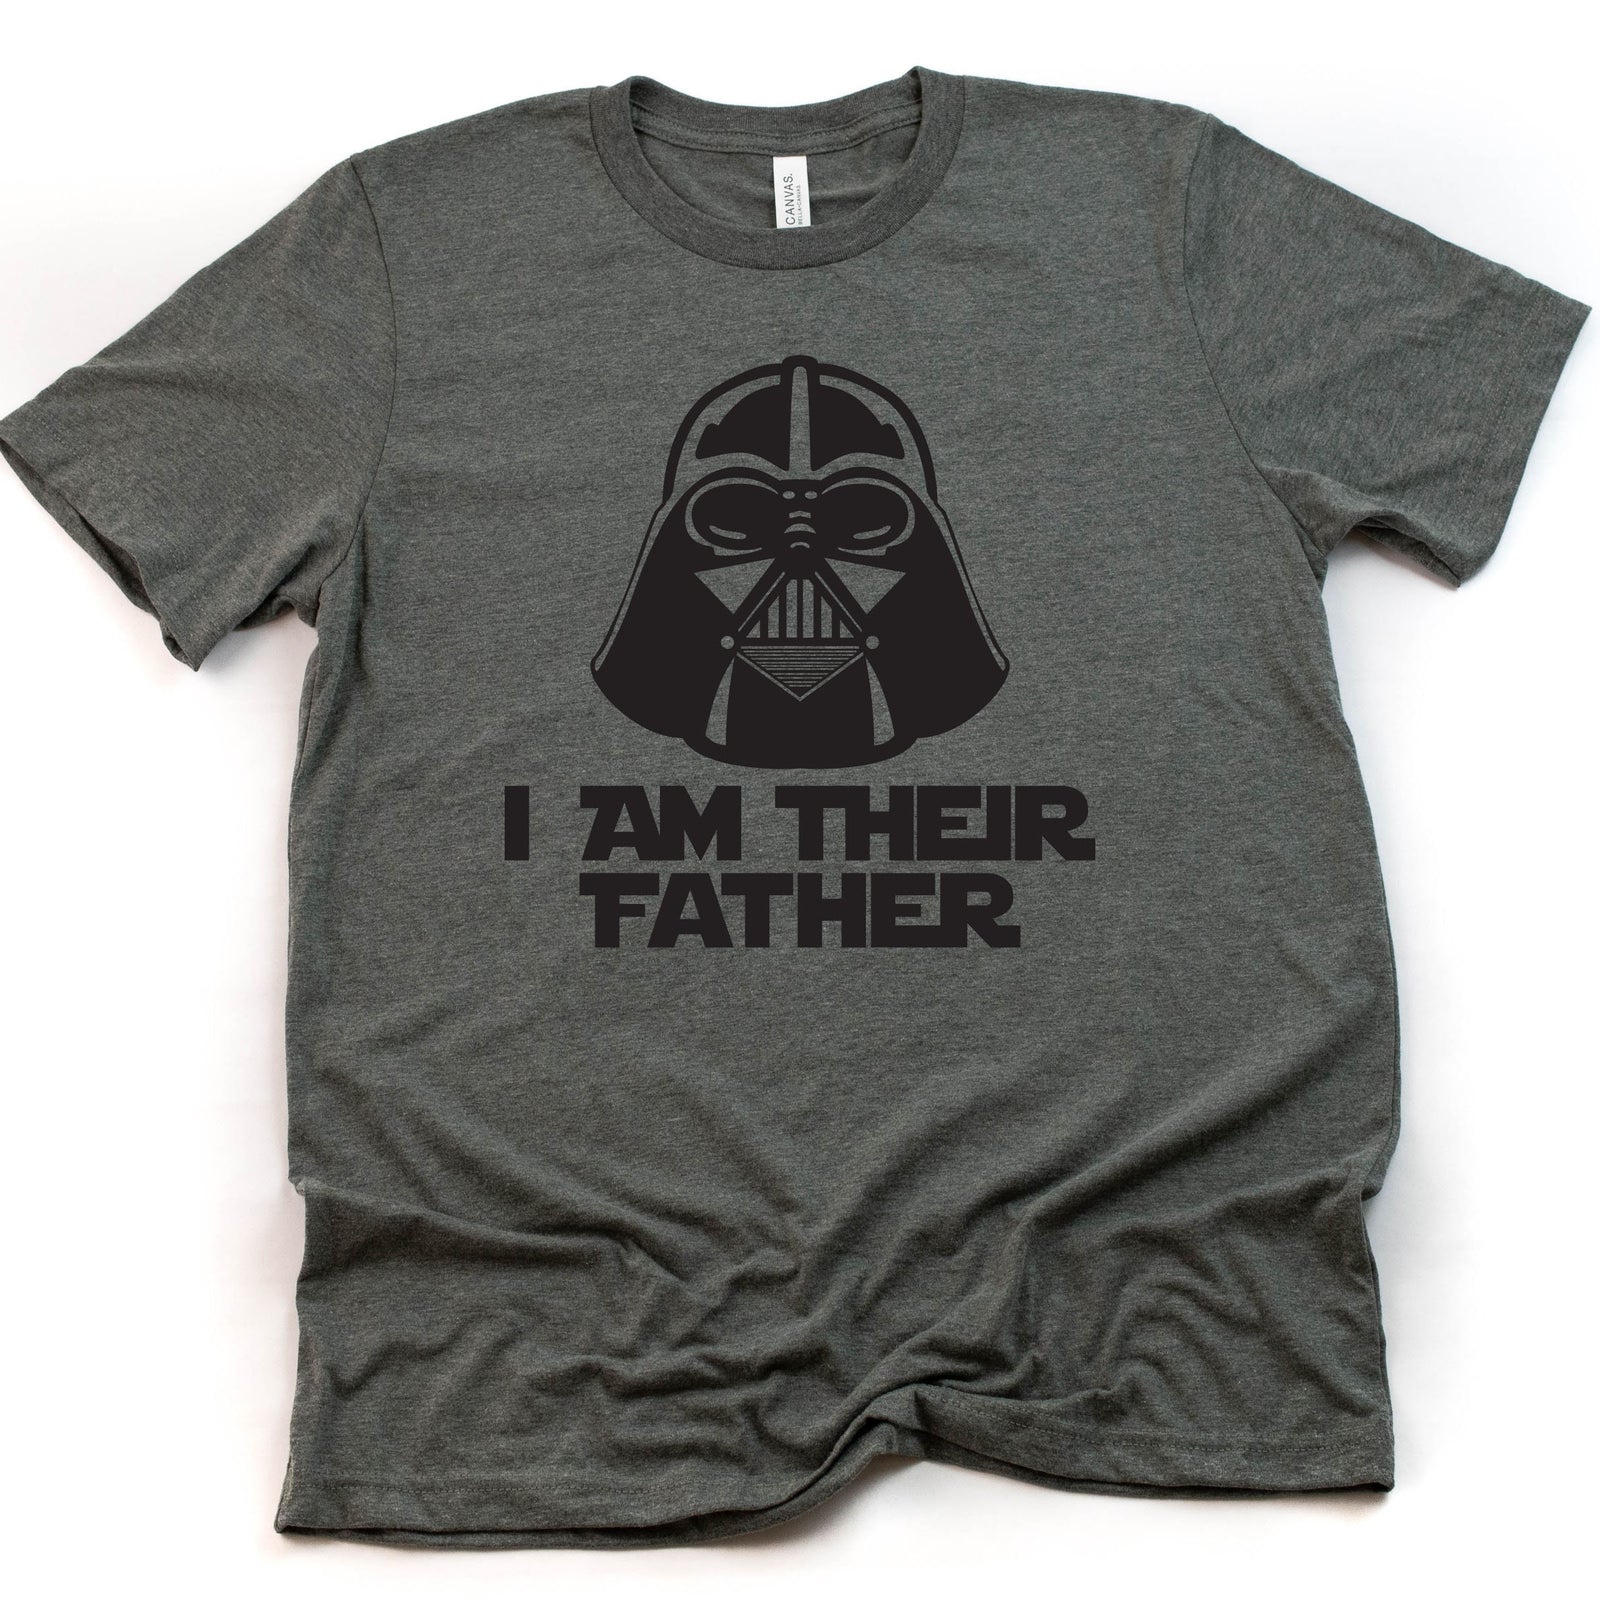 I am Their Father - Darth Vader T Shirt - Star Wars Fan T-shirt - Star Wars Lover Gift - Darth Vader Fan Shirt